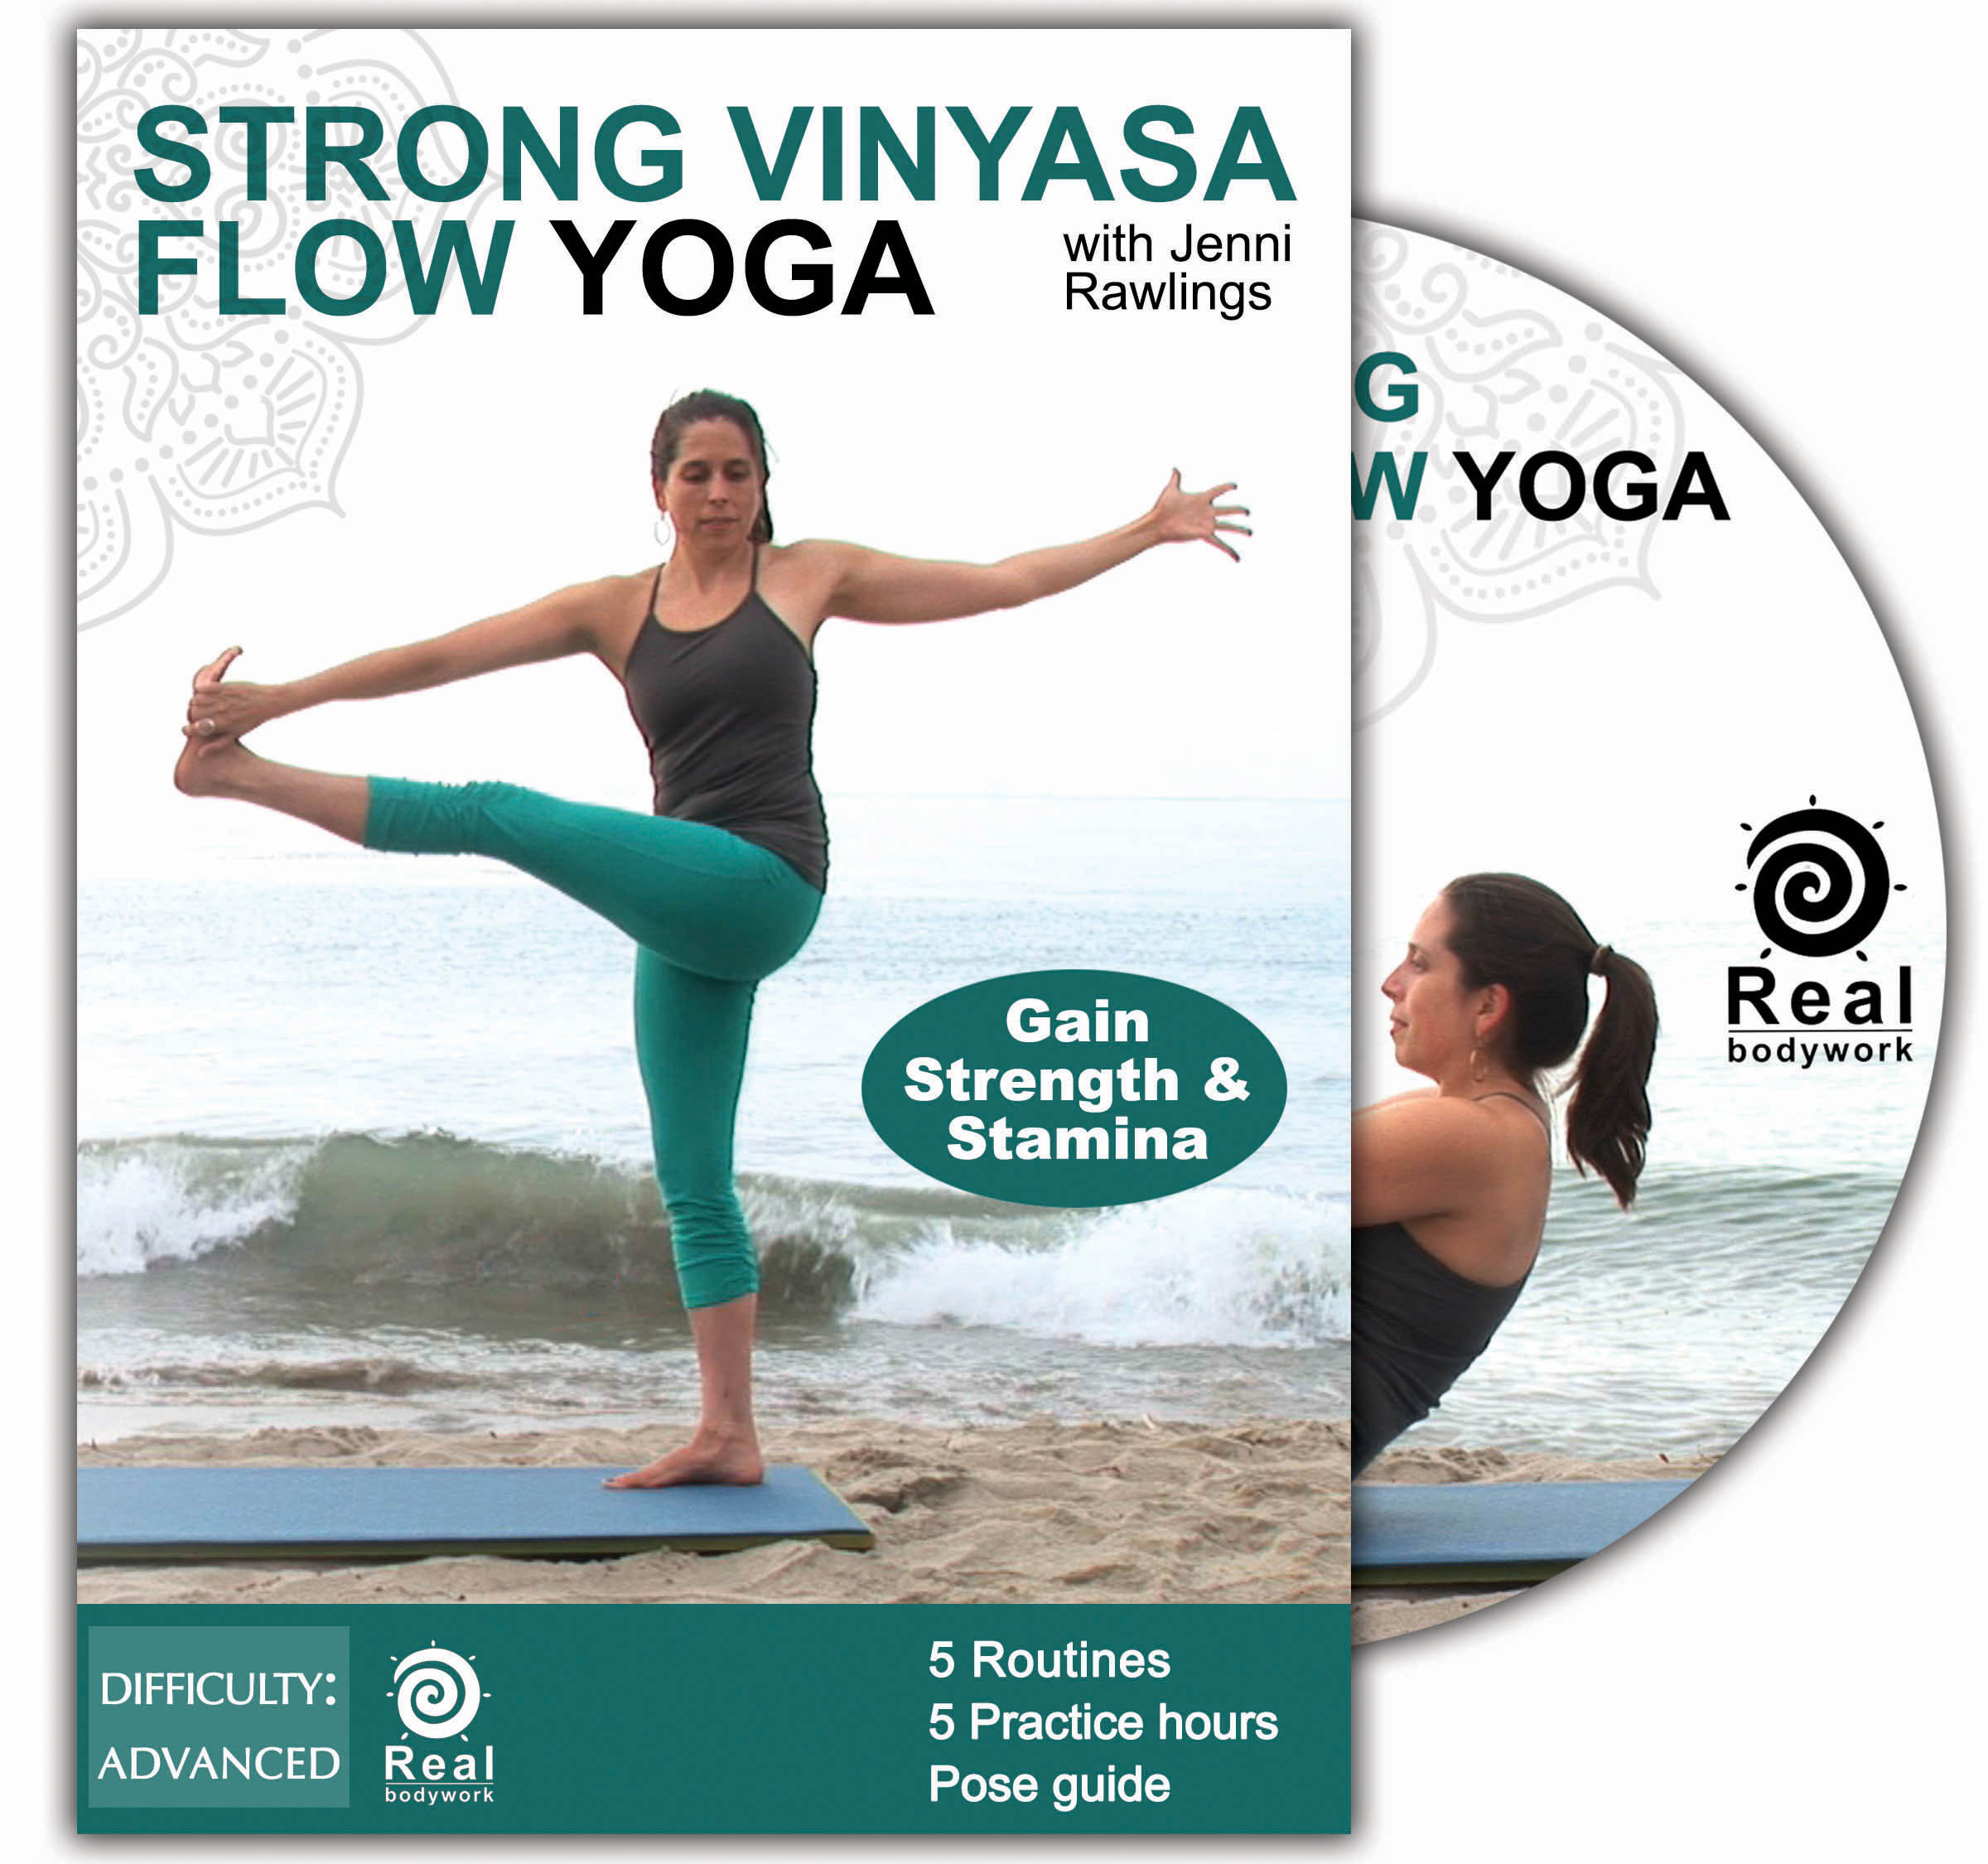 https://www.realbodywork.com/wp-content/uploads/2015/06/Yoga-strong.jpg